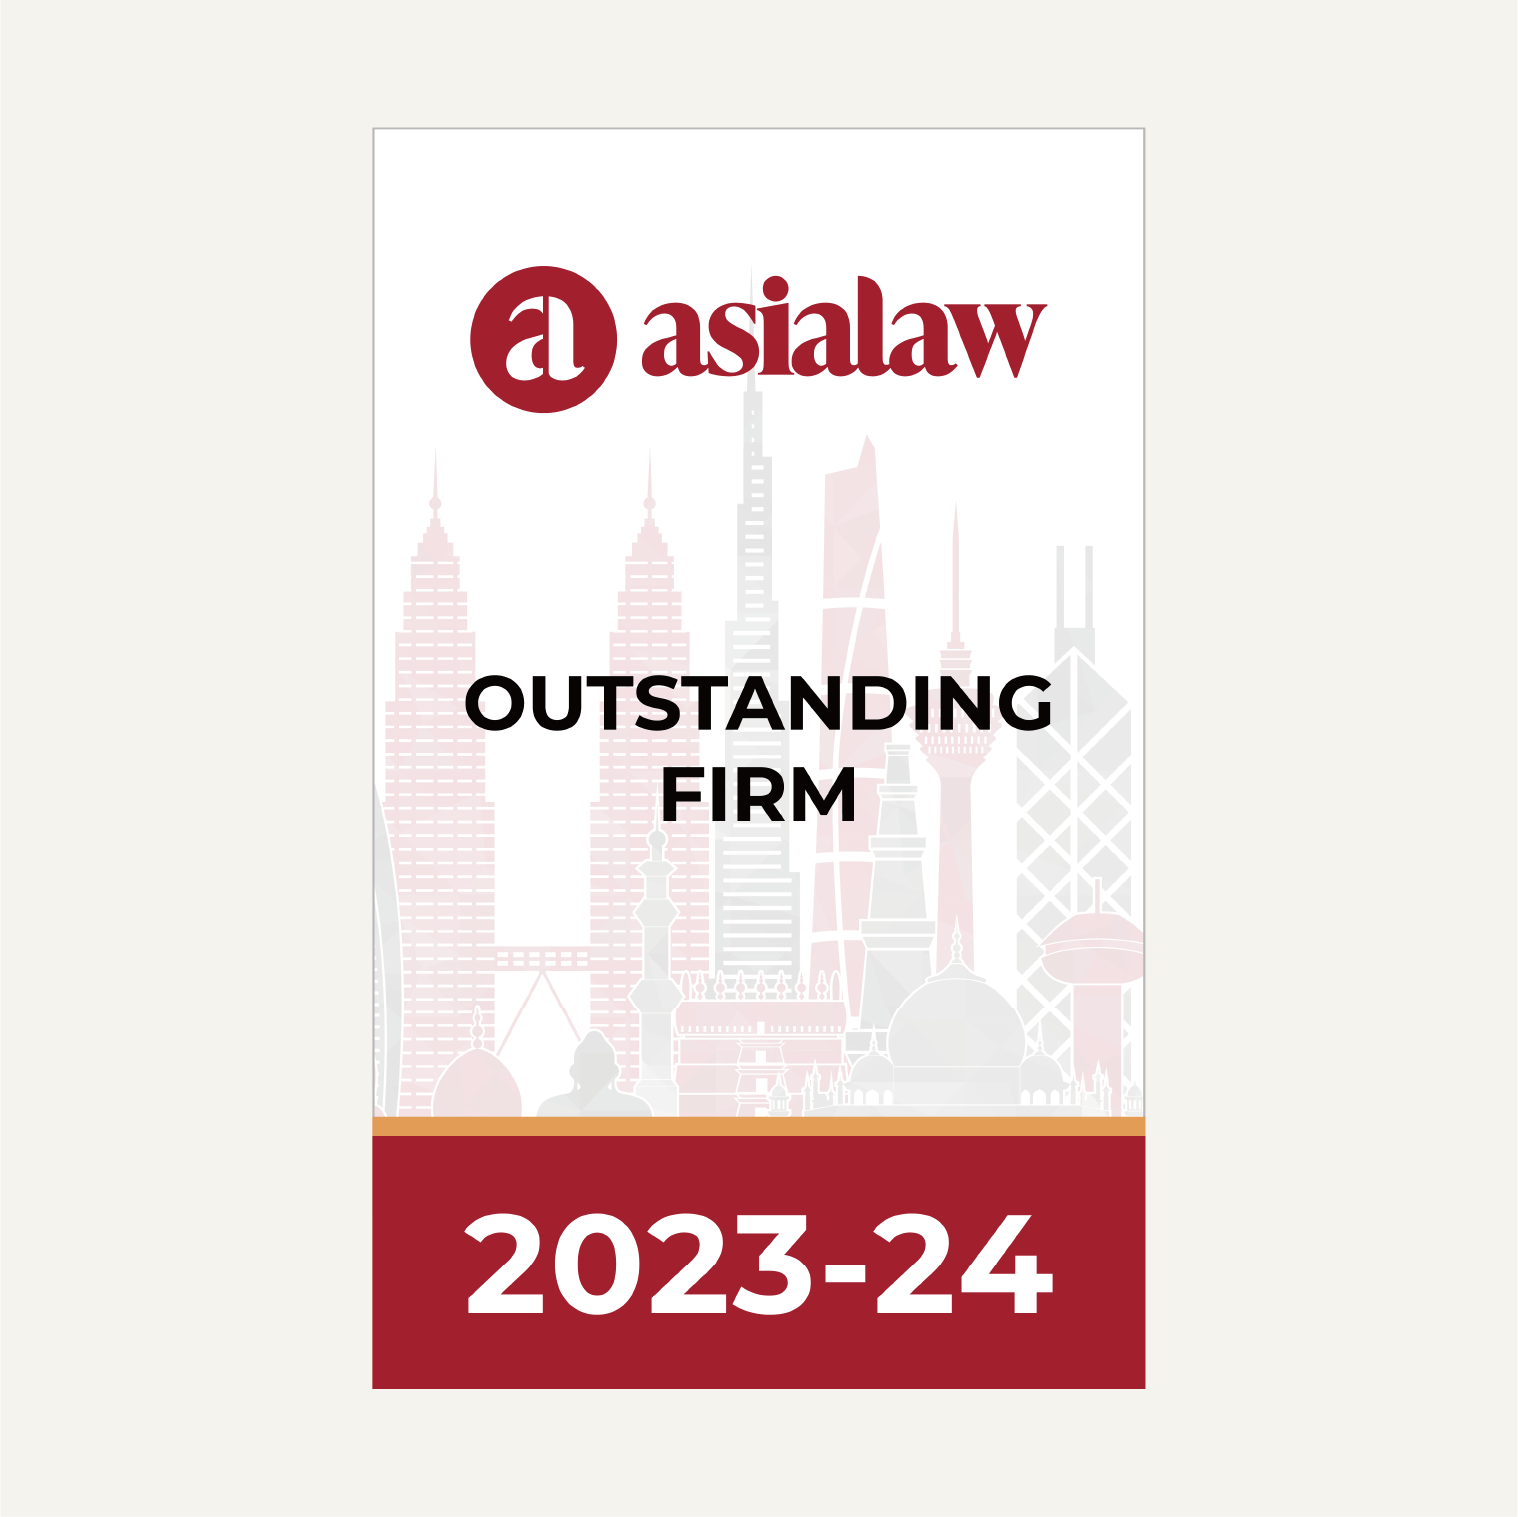 Atsumi & Sakai has received high evaluation in asialaw 2023/2024